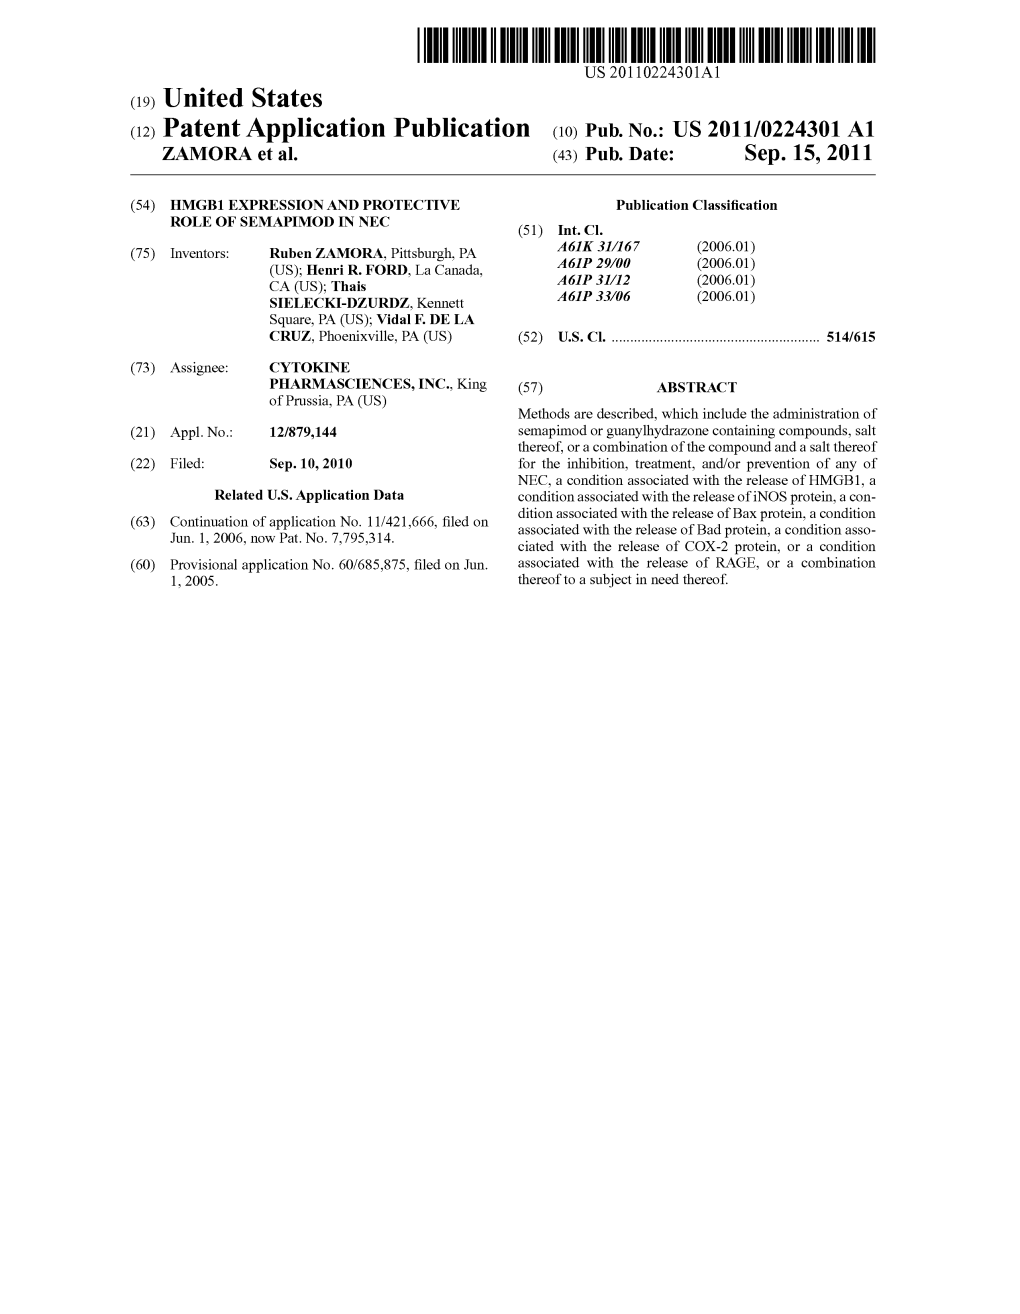 (12) Patent Application Publication (10) Pub. No.: US 2011/0224301 A1 ZAMORA Et Al